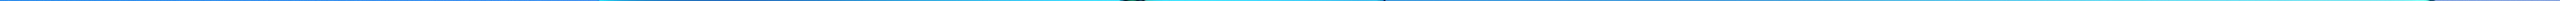 Waves 4K Wallpaper, Blue, Gradient background, Stock